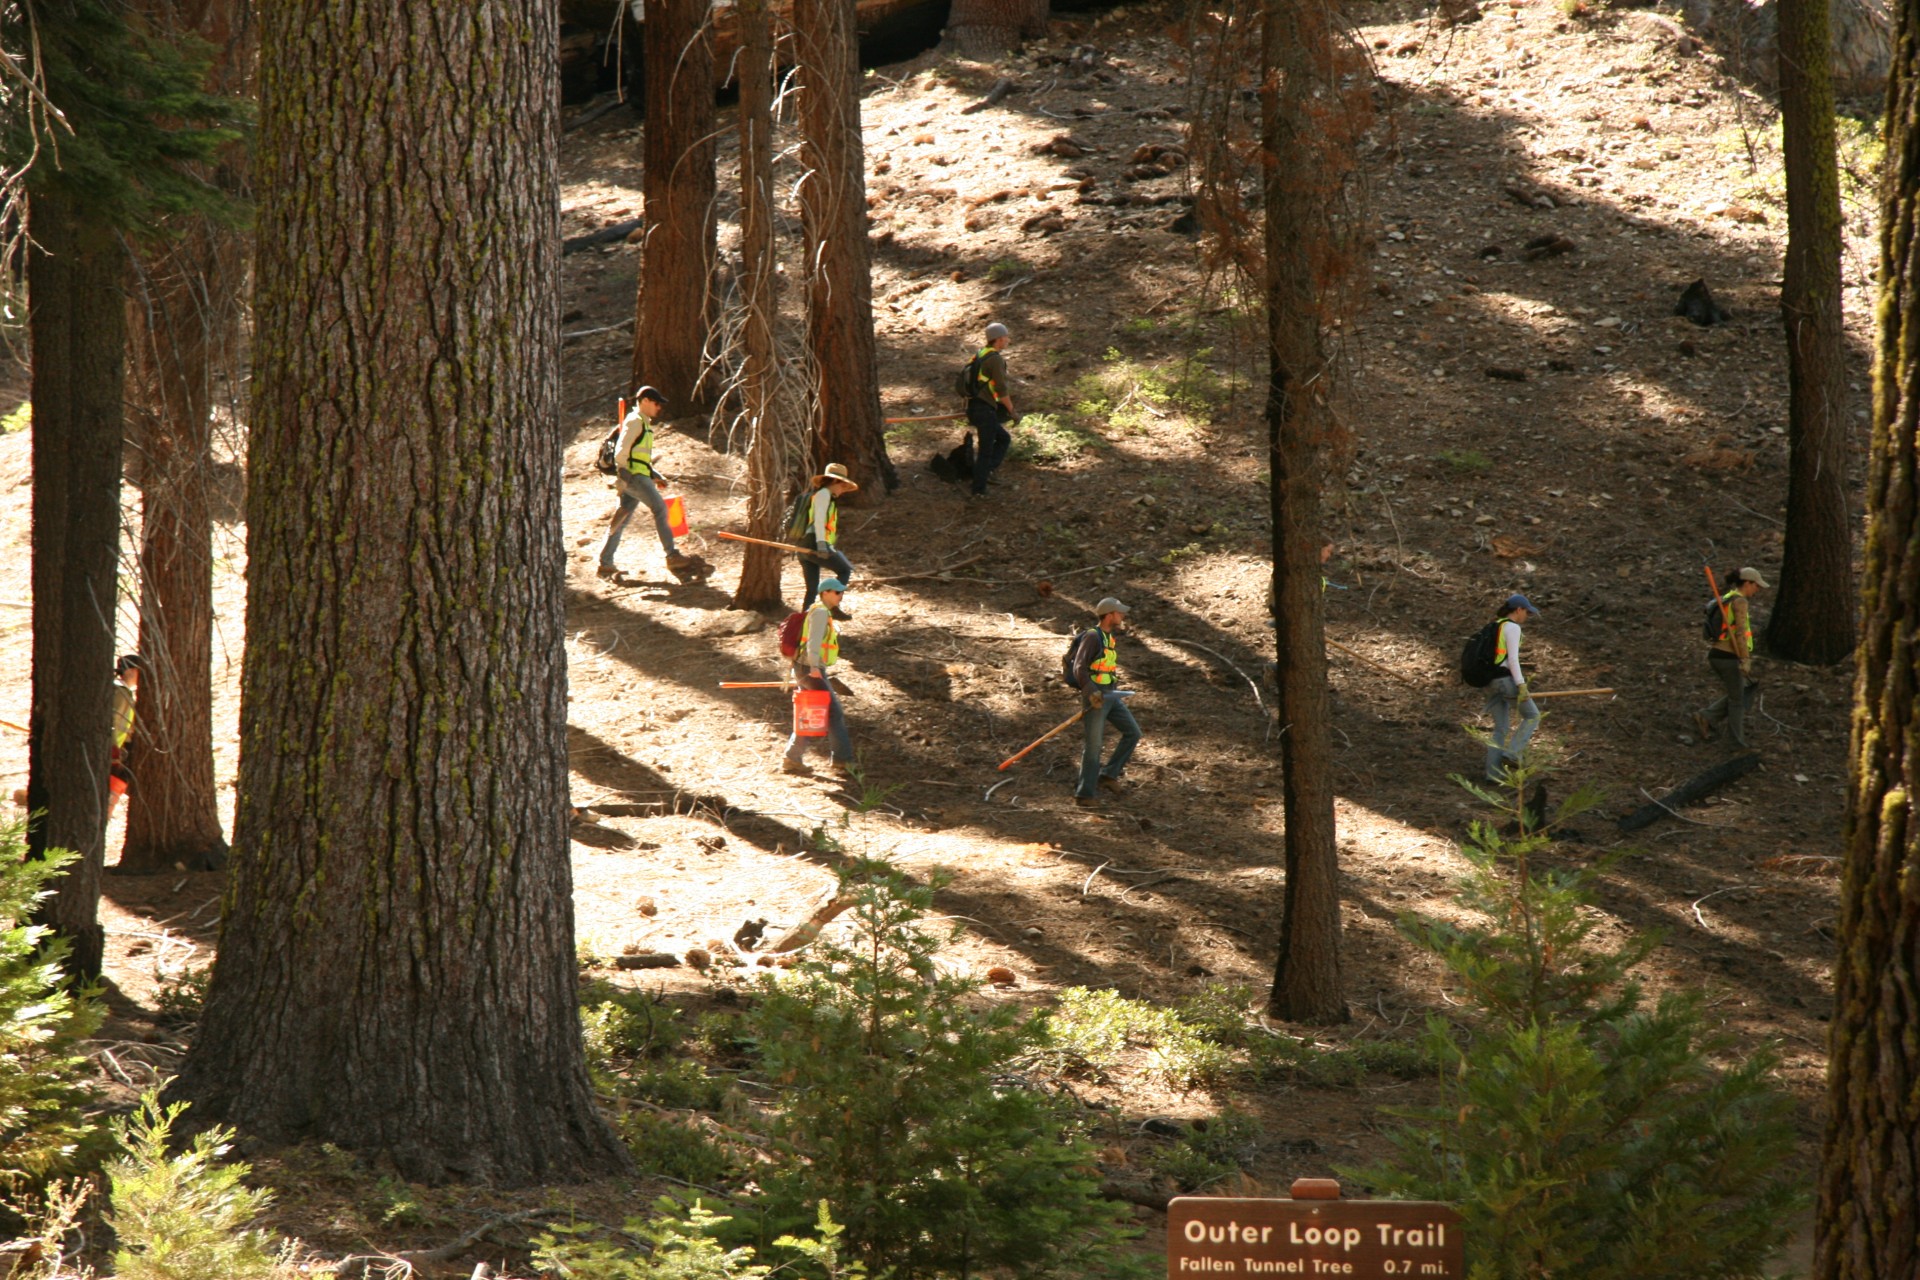 Yosemite Park Rangers